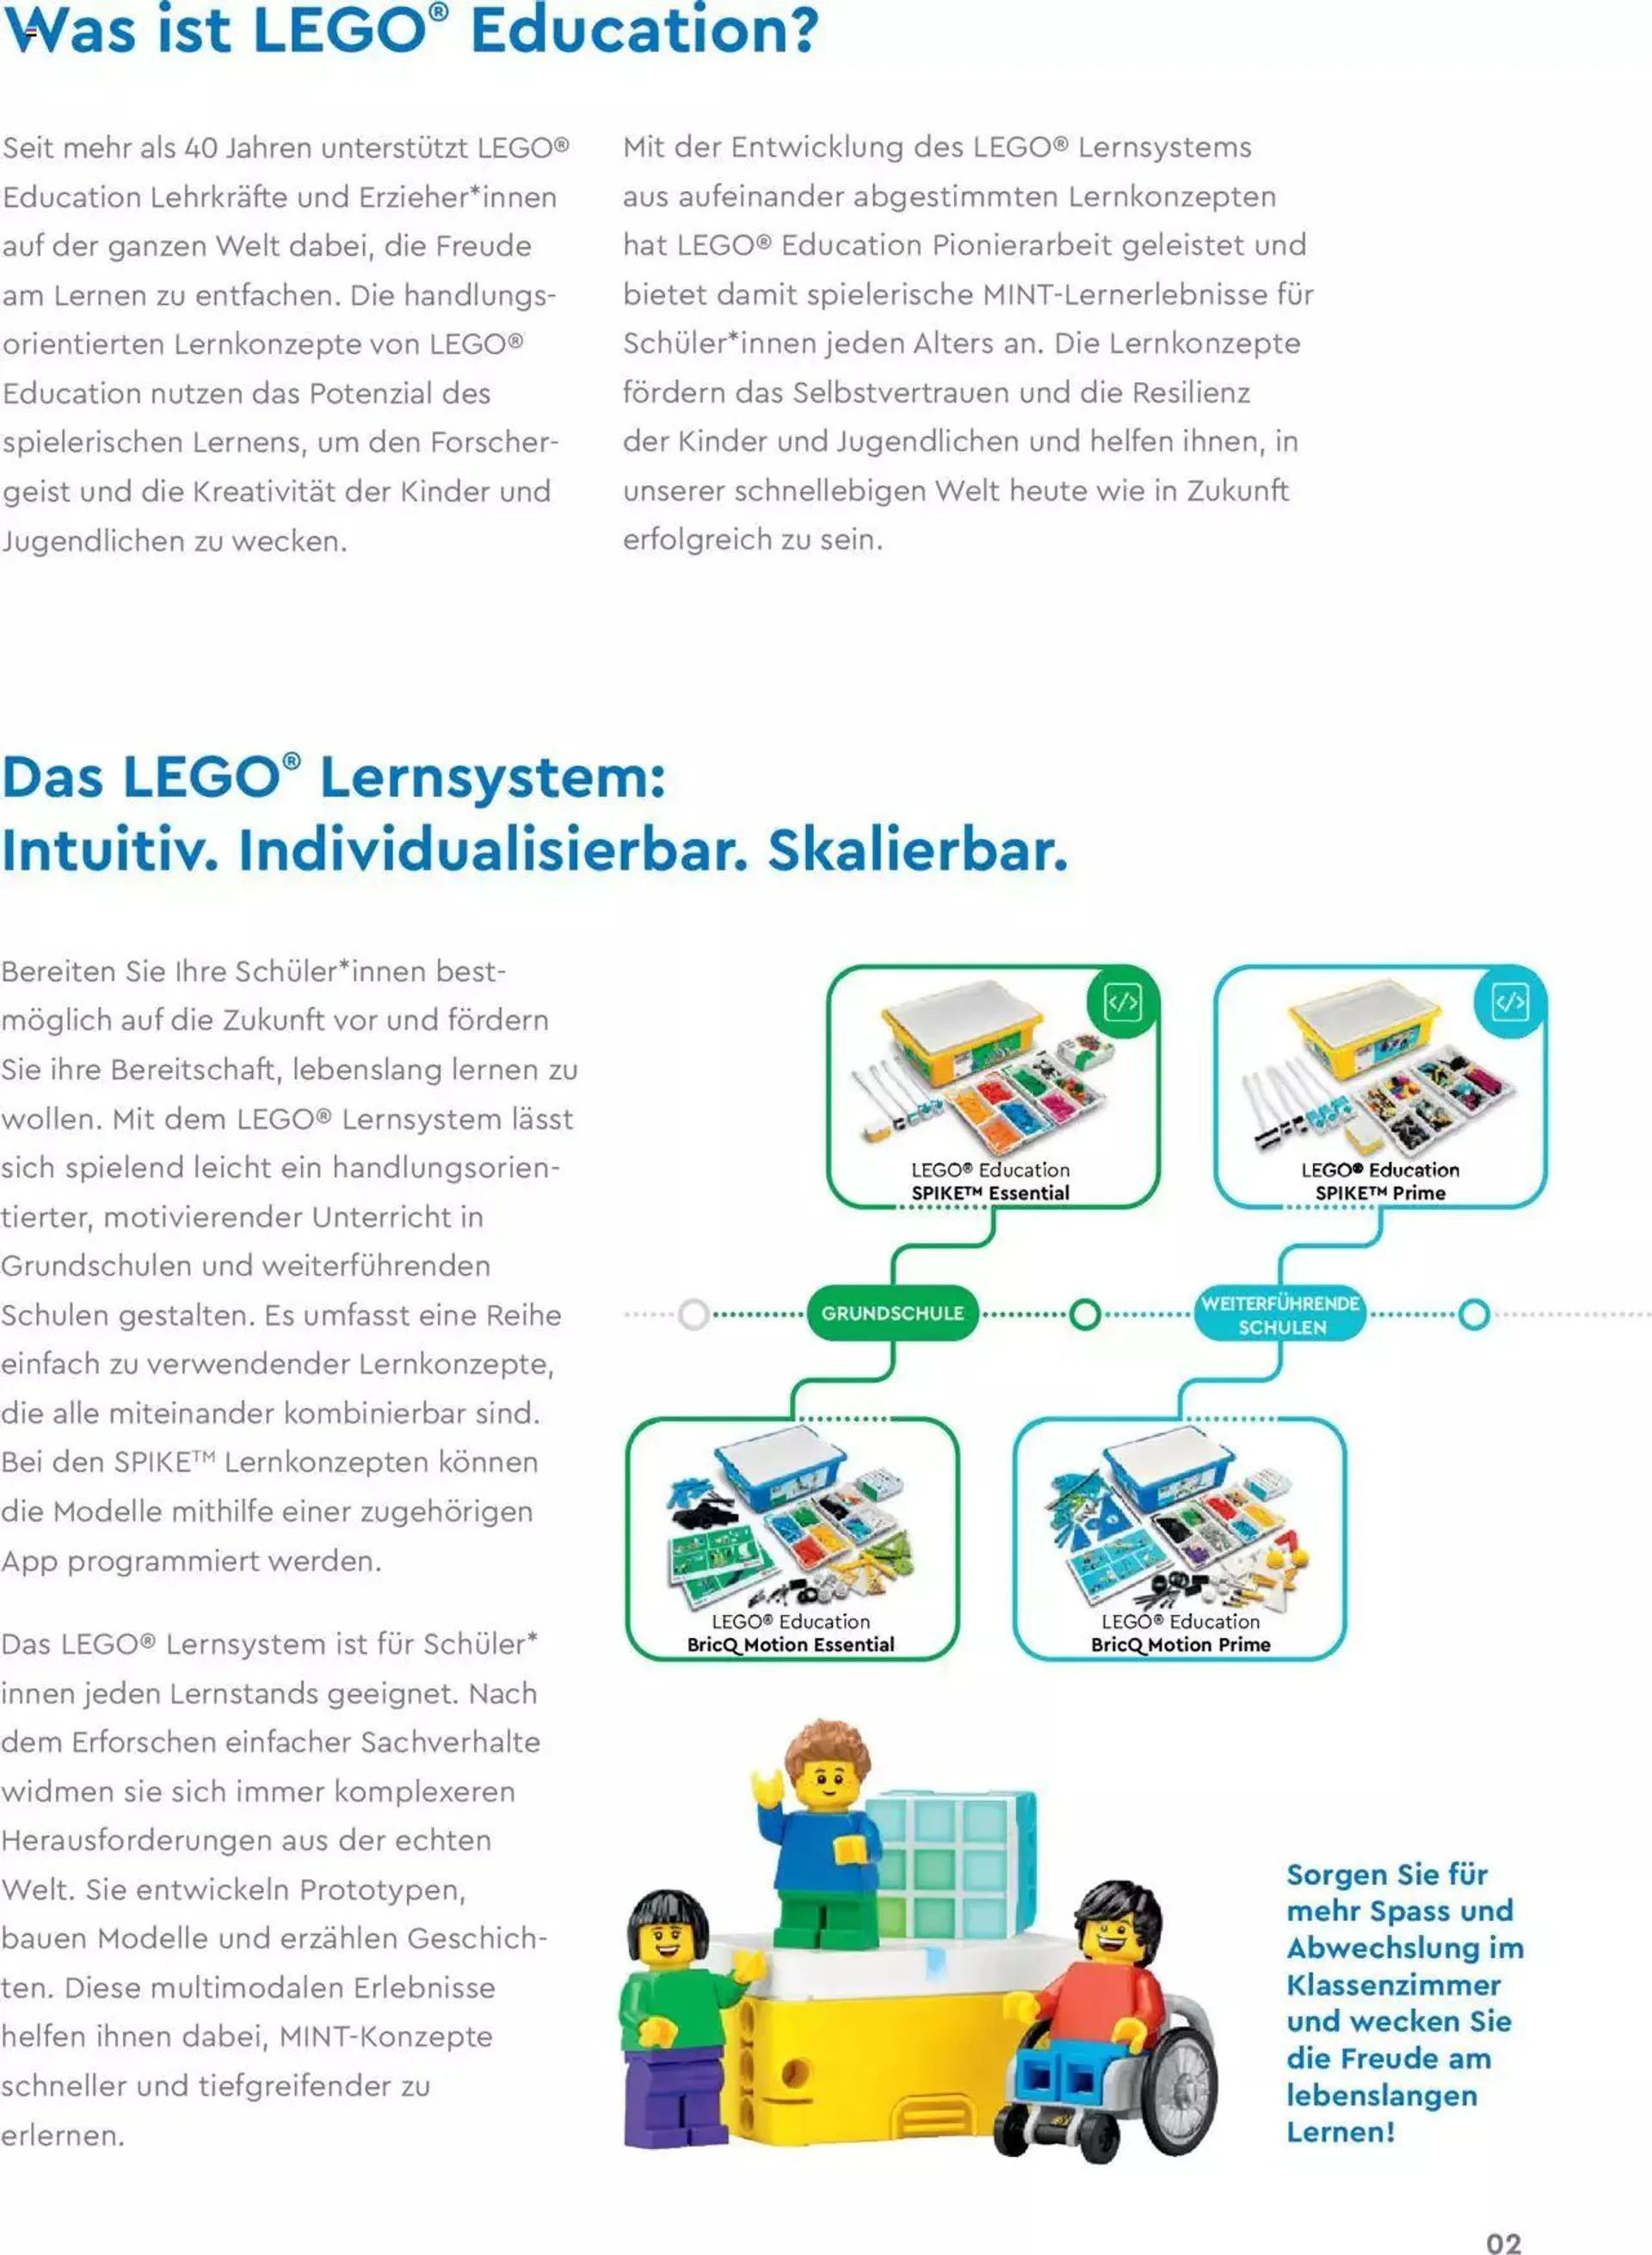 Conrad - Lego Education Lernkonzepte - 2